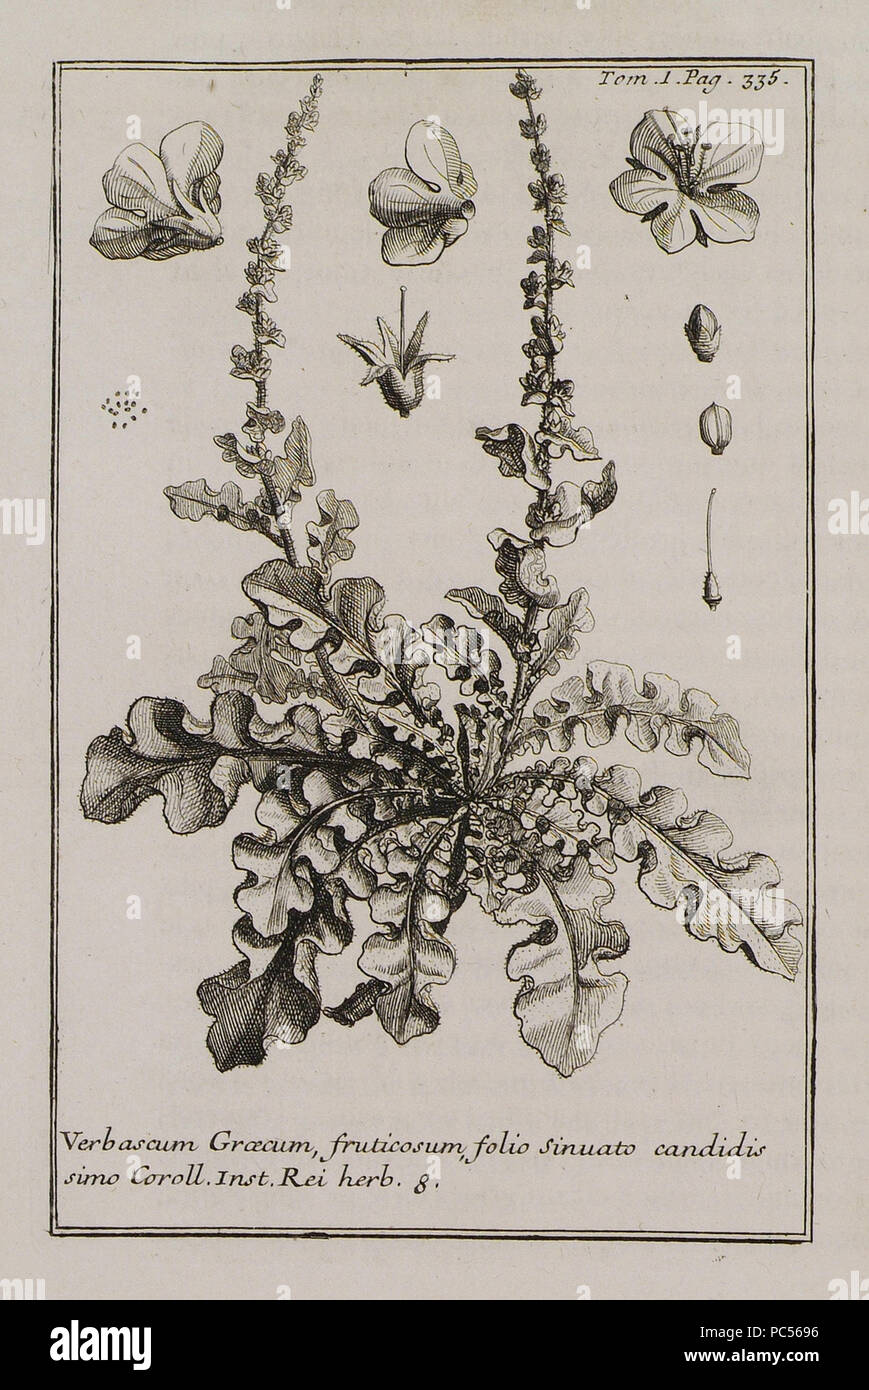 628 Verbascum Graecum, fruticosum, folio sinuato candidis simo Coroll Inst Rei herb 8 - Tournefort Joseph Pitton De - 1717 Stock Photo